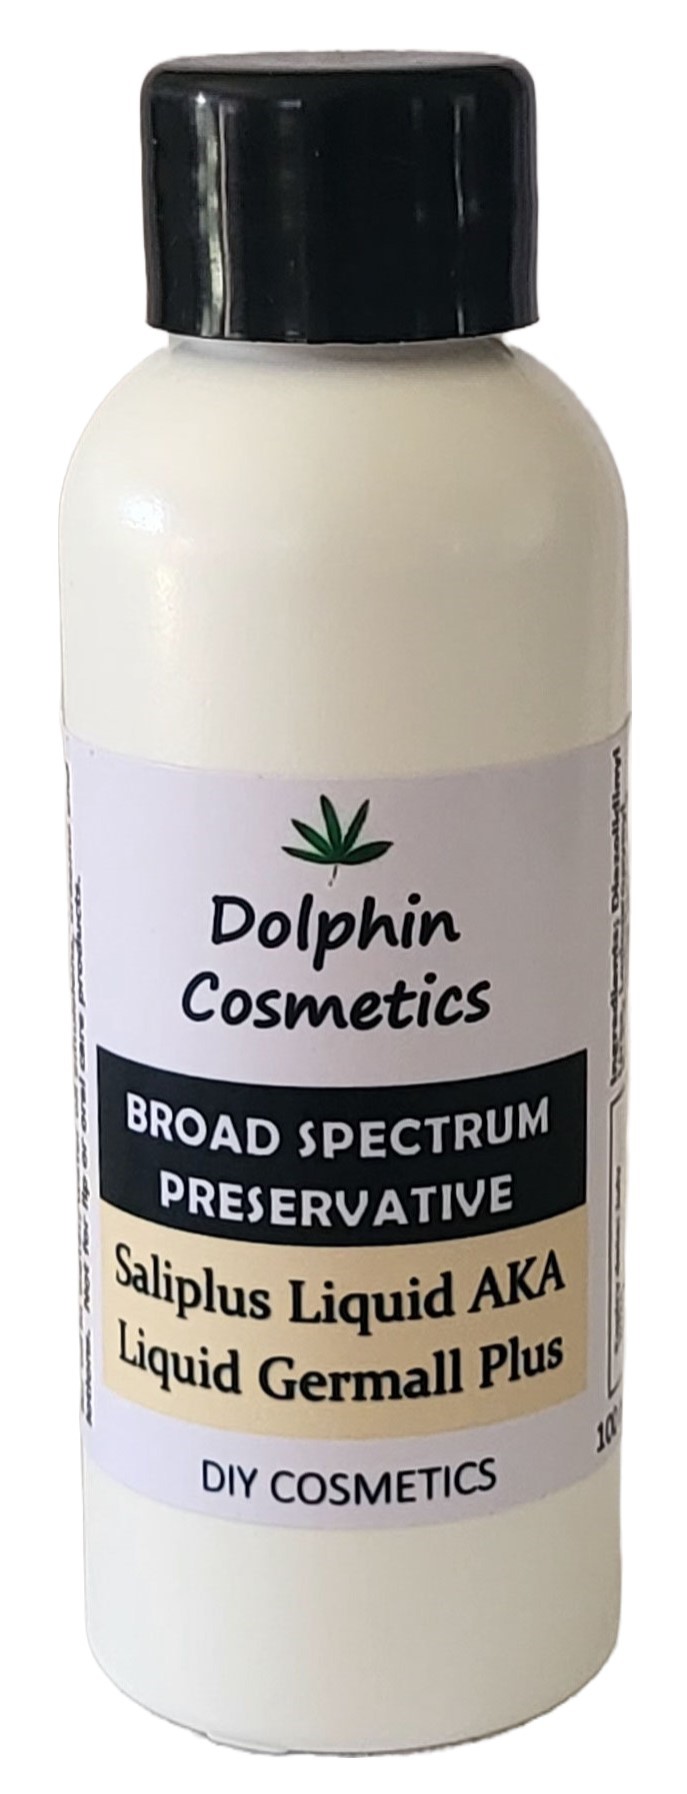 dolphin-cosmetics-saliplus-liquid-aka--liquid-germall-plus